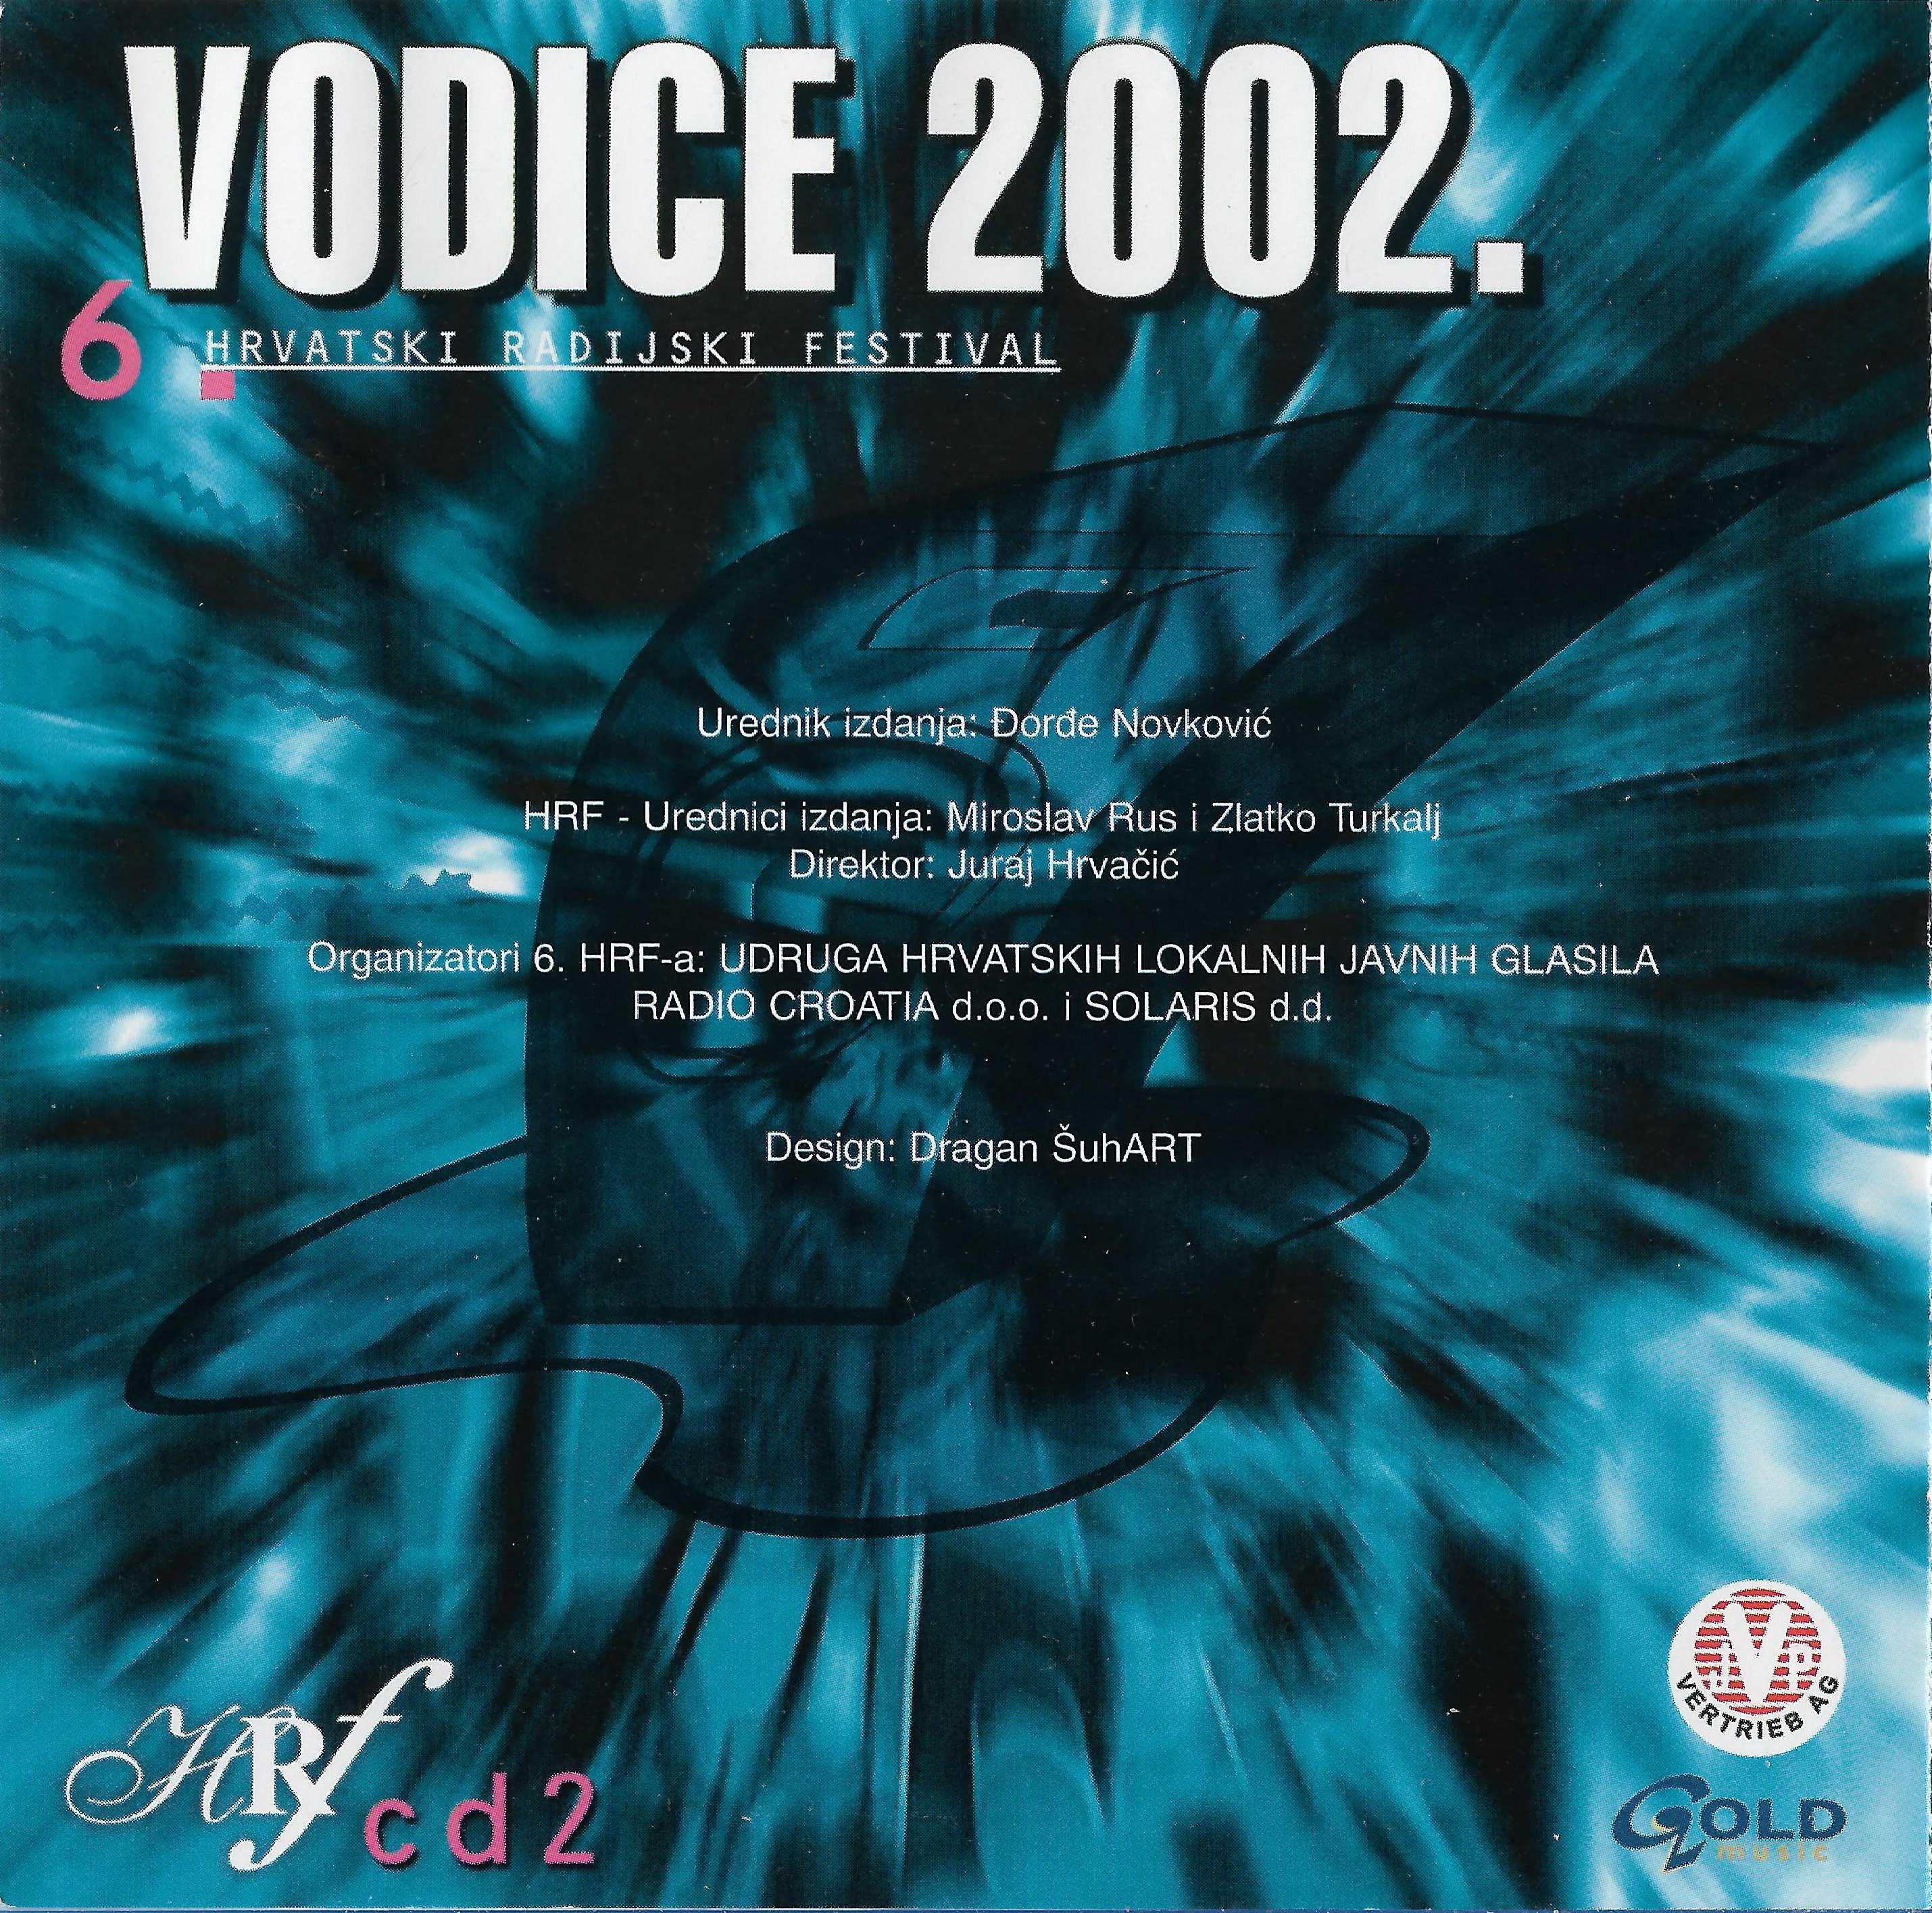 Vodice 2002 CD 2 1 b